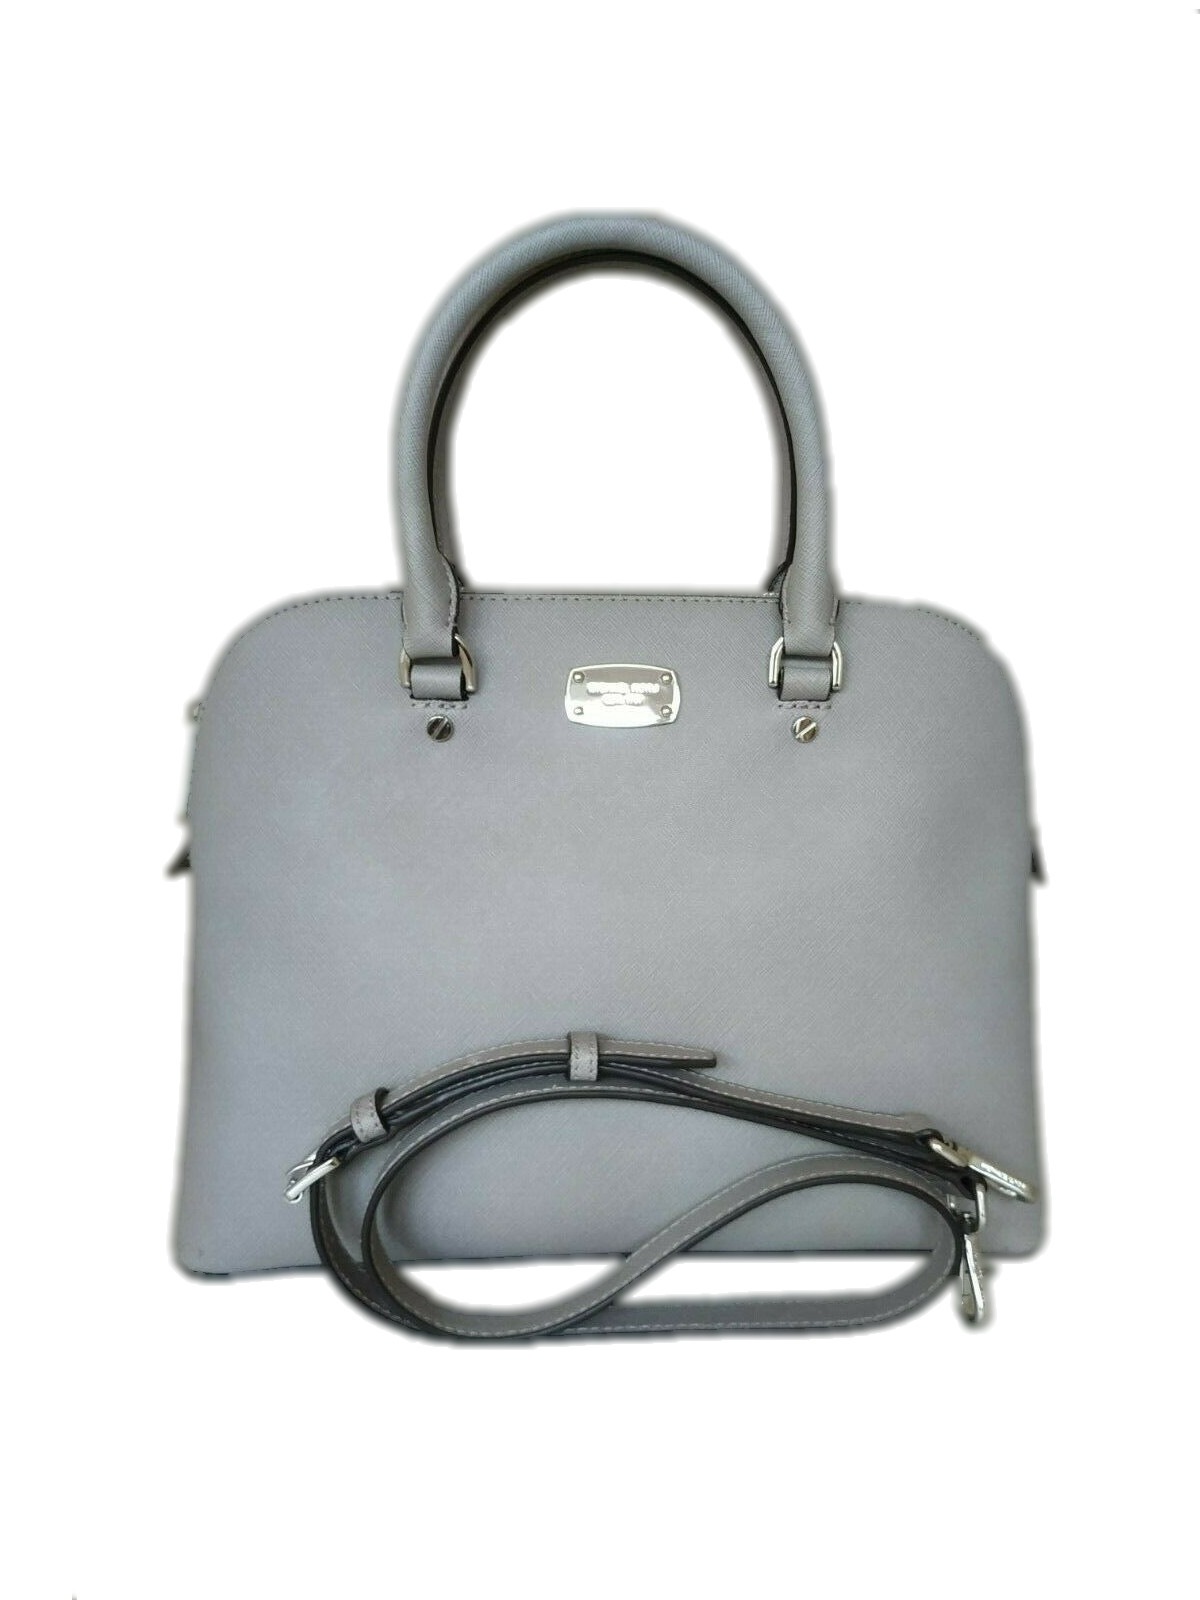 MK Michael Kors Cindy L Pearl Grey Saffiano Leather Bag - Earth Luxury